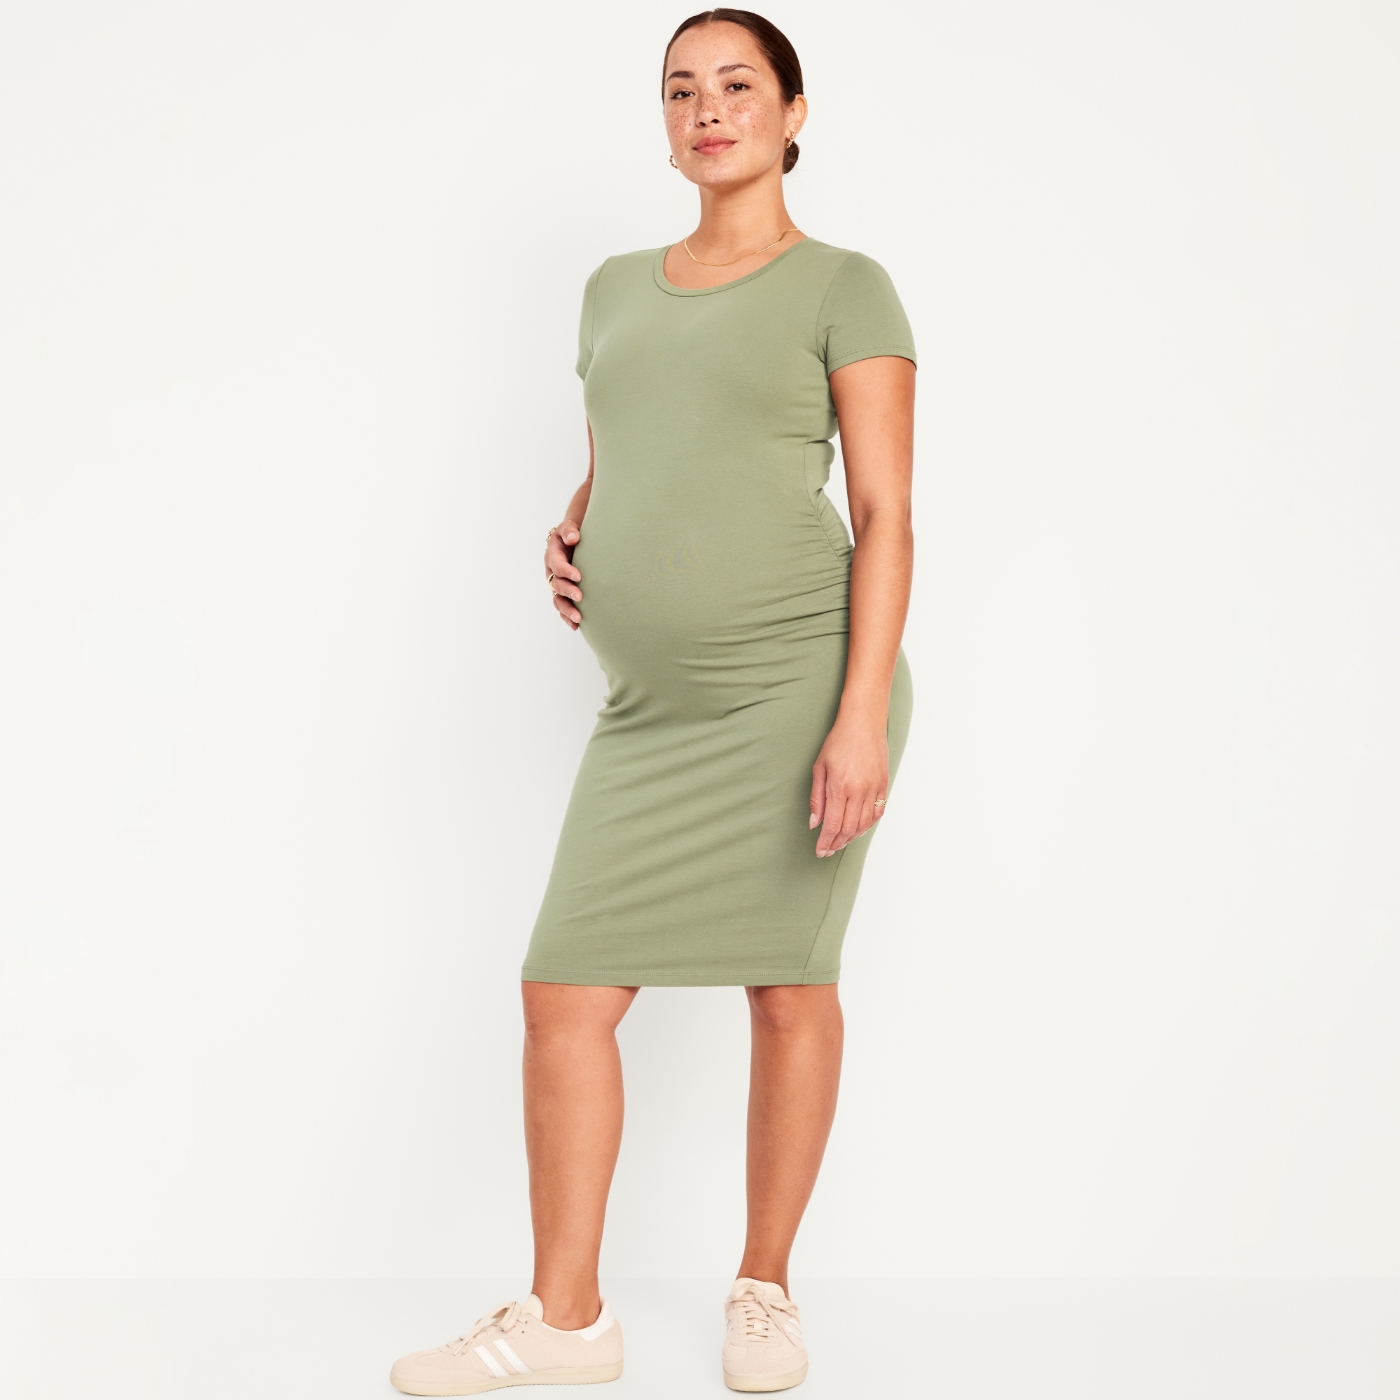 Maternity shorts overalls in light wash denim